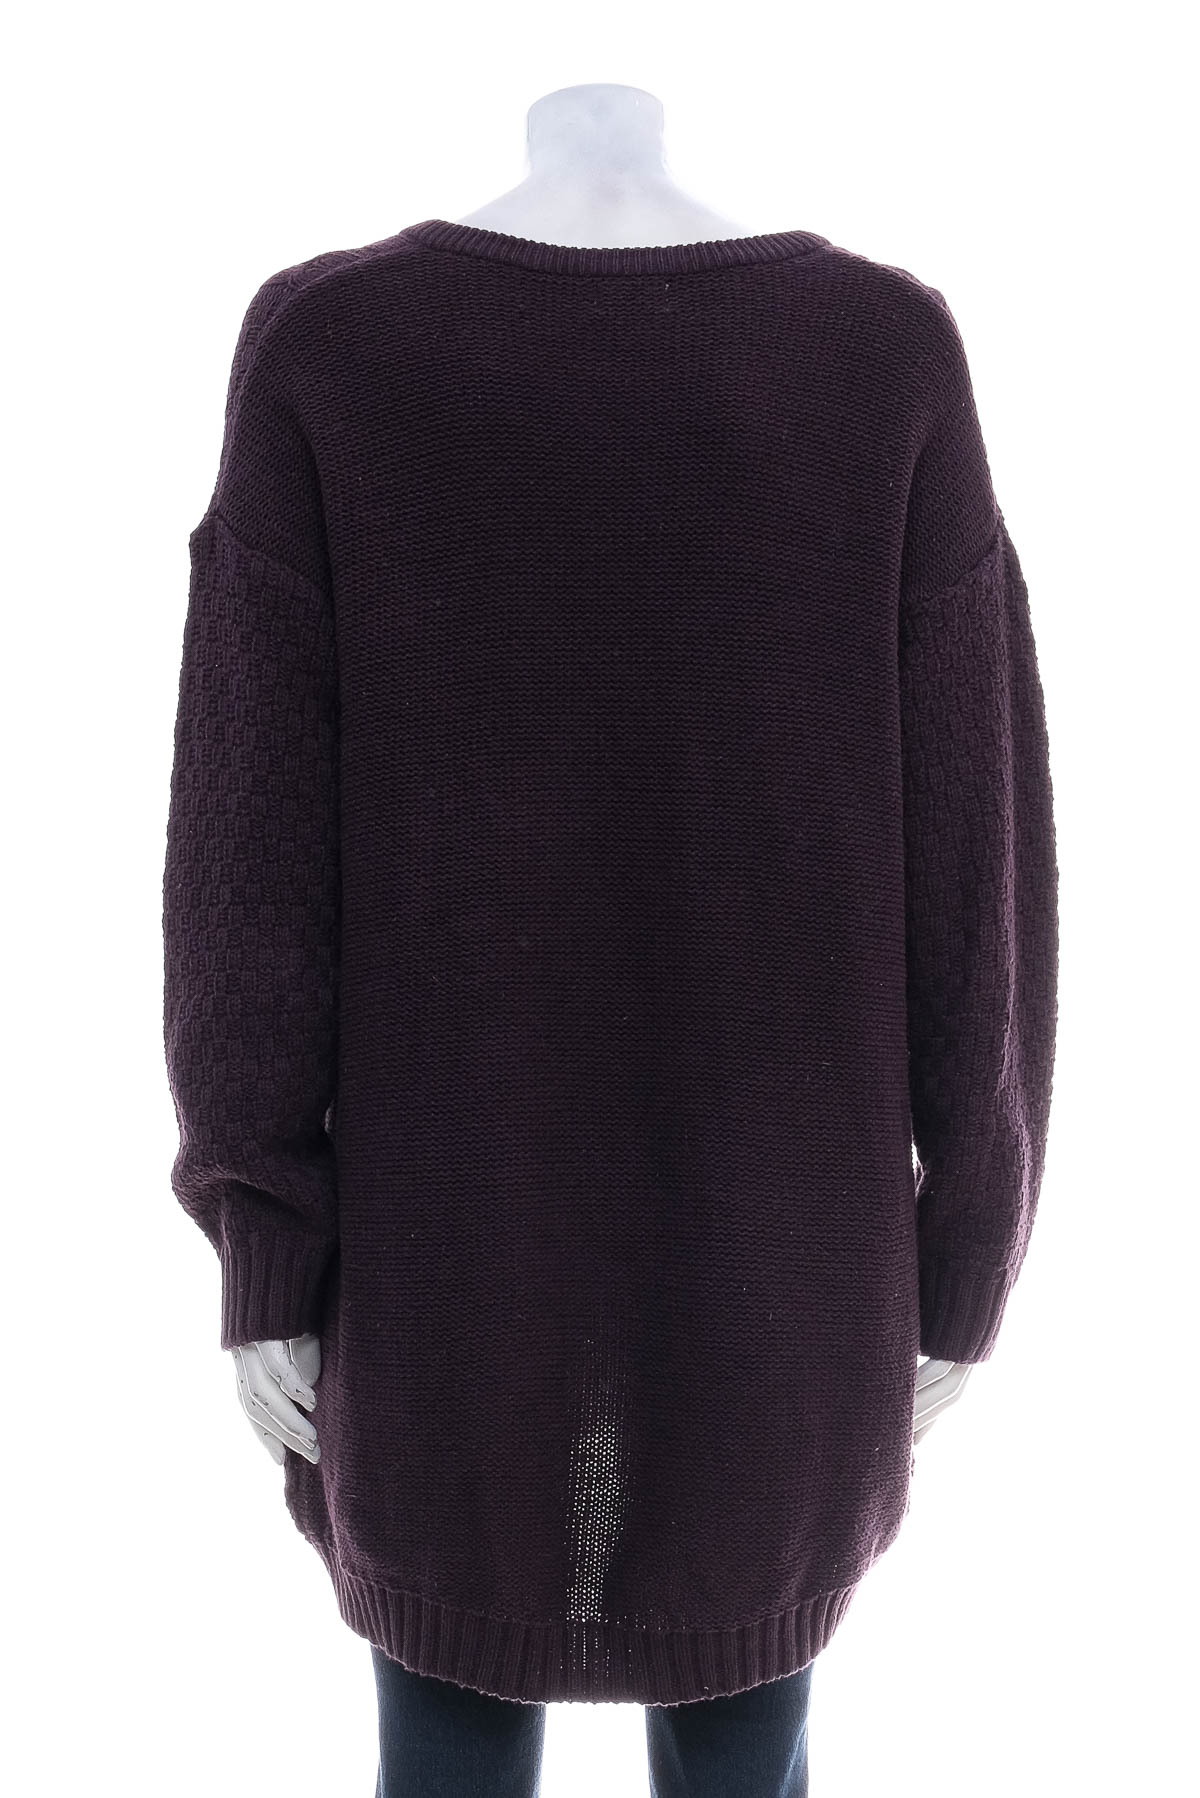 Women's sweater - OLD NAVY - 1